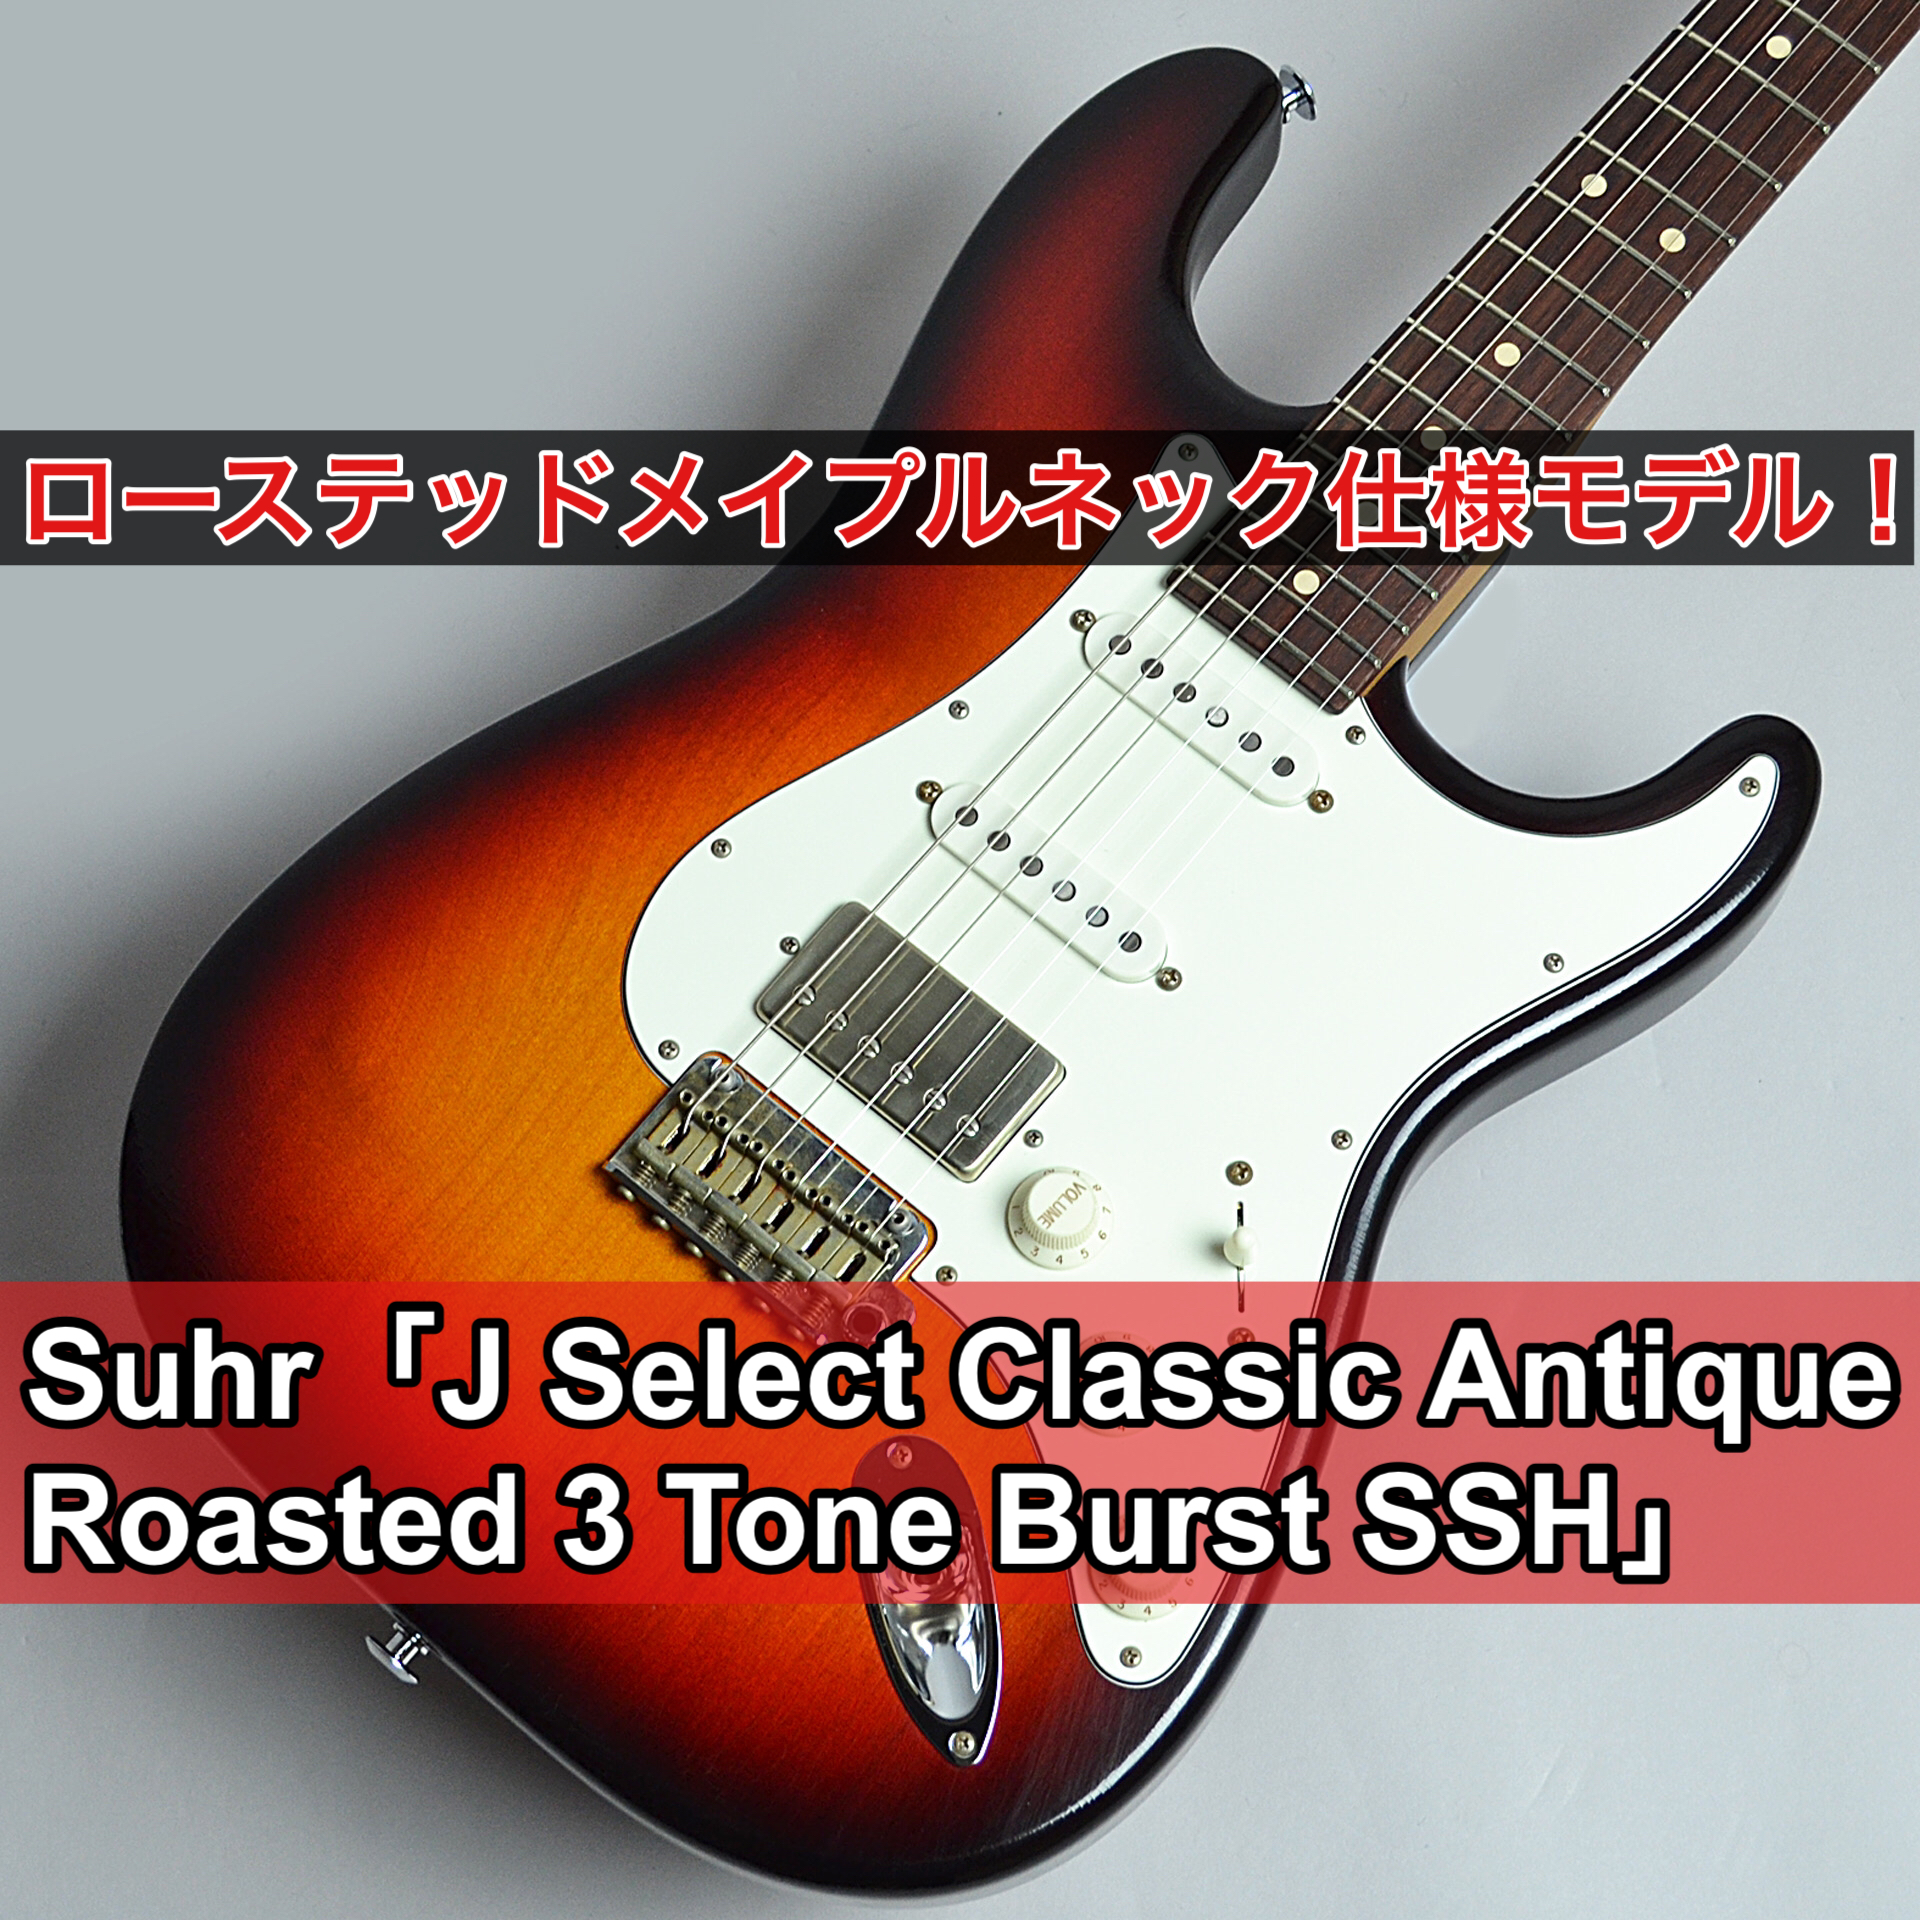 Suhr Guitarsの日本国内限定仕様"J Select Series"よりローステッドメイプルネックを採用した「J Select Classic Antique Roasted 3 Tone Burst SSH」が入荷しました！ *今回紹介する「J Select Classic Antique […]